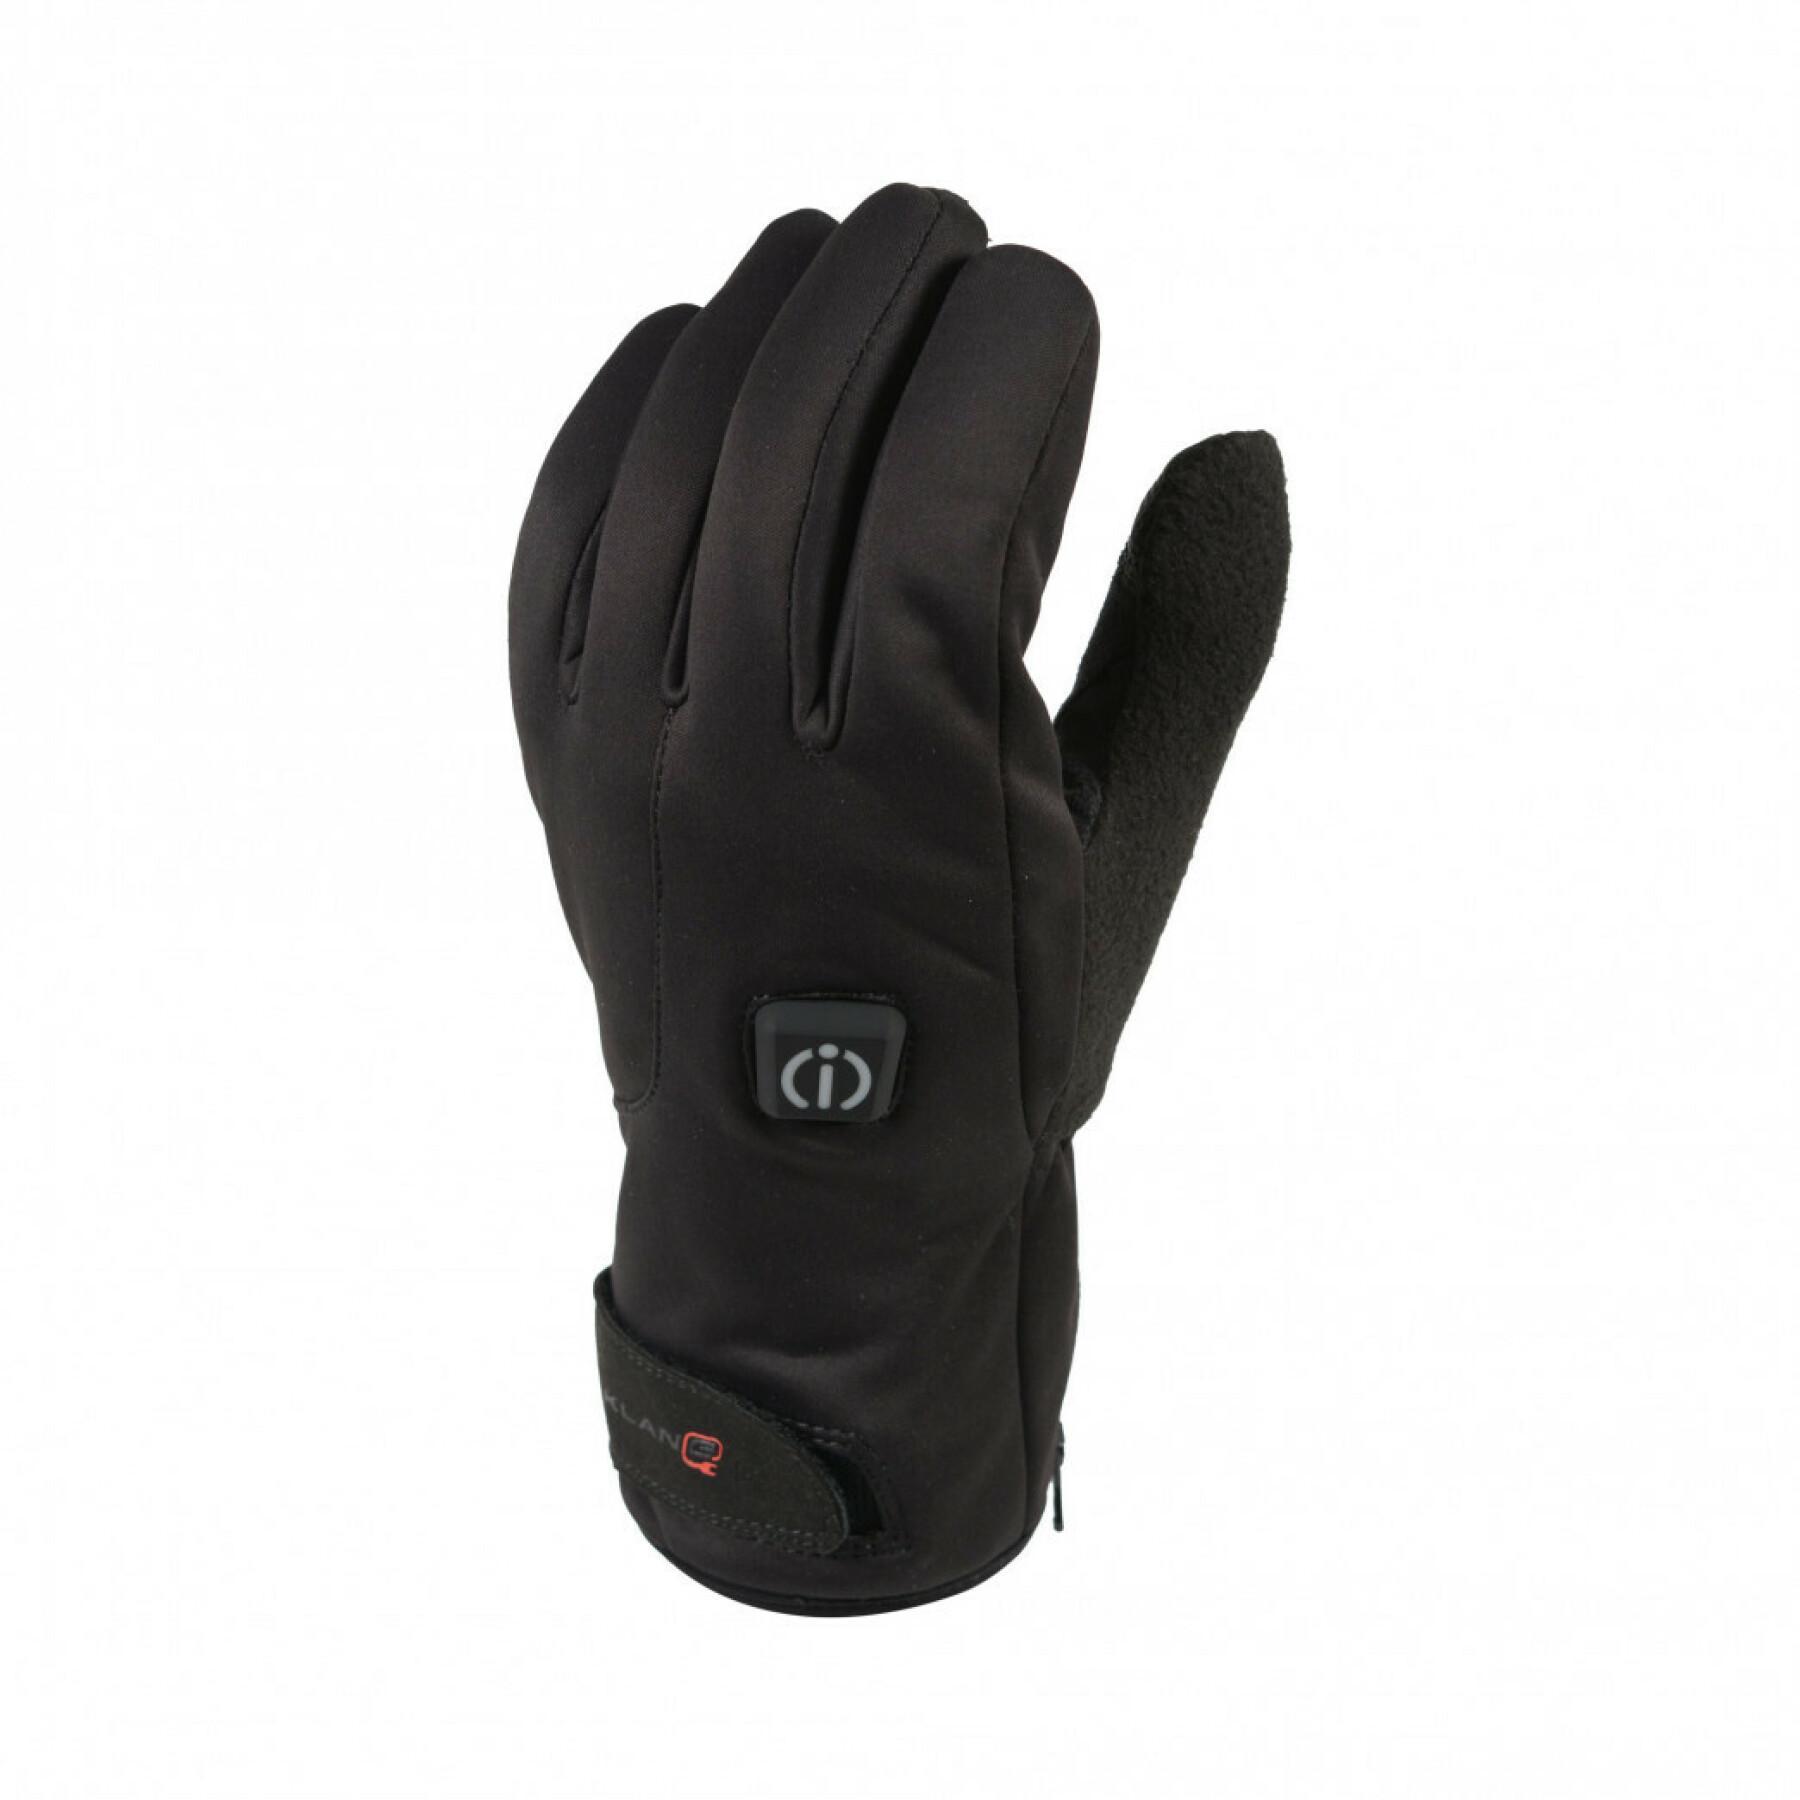 Heated motorcycle gloves Klan-e Unix